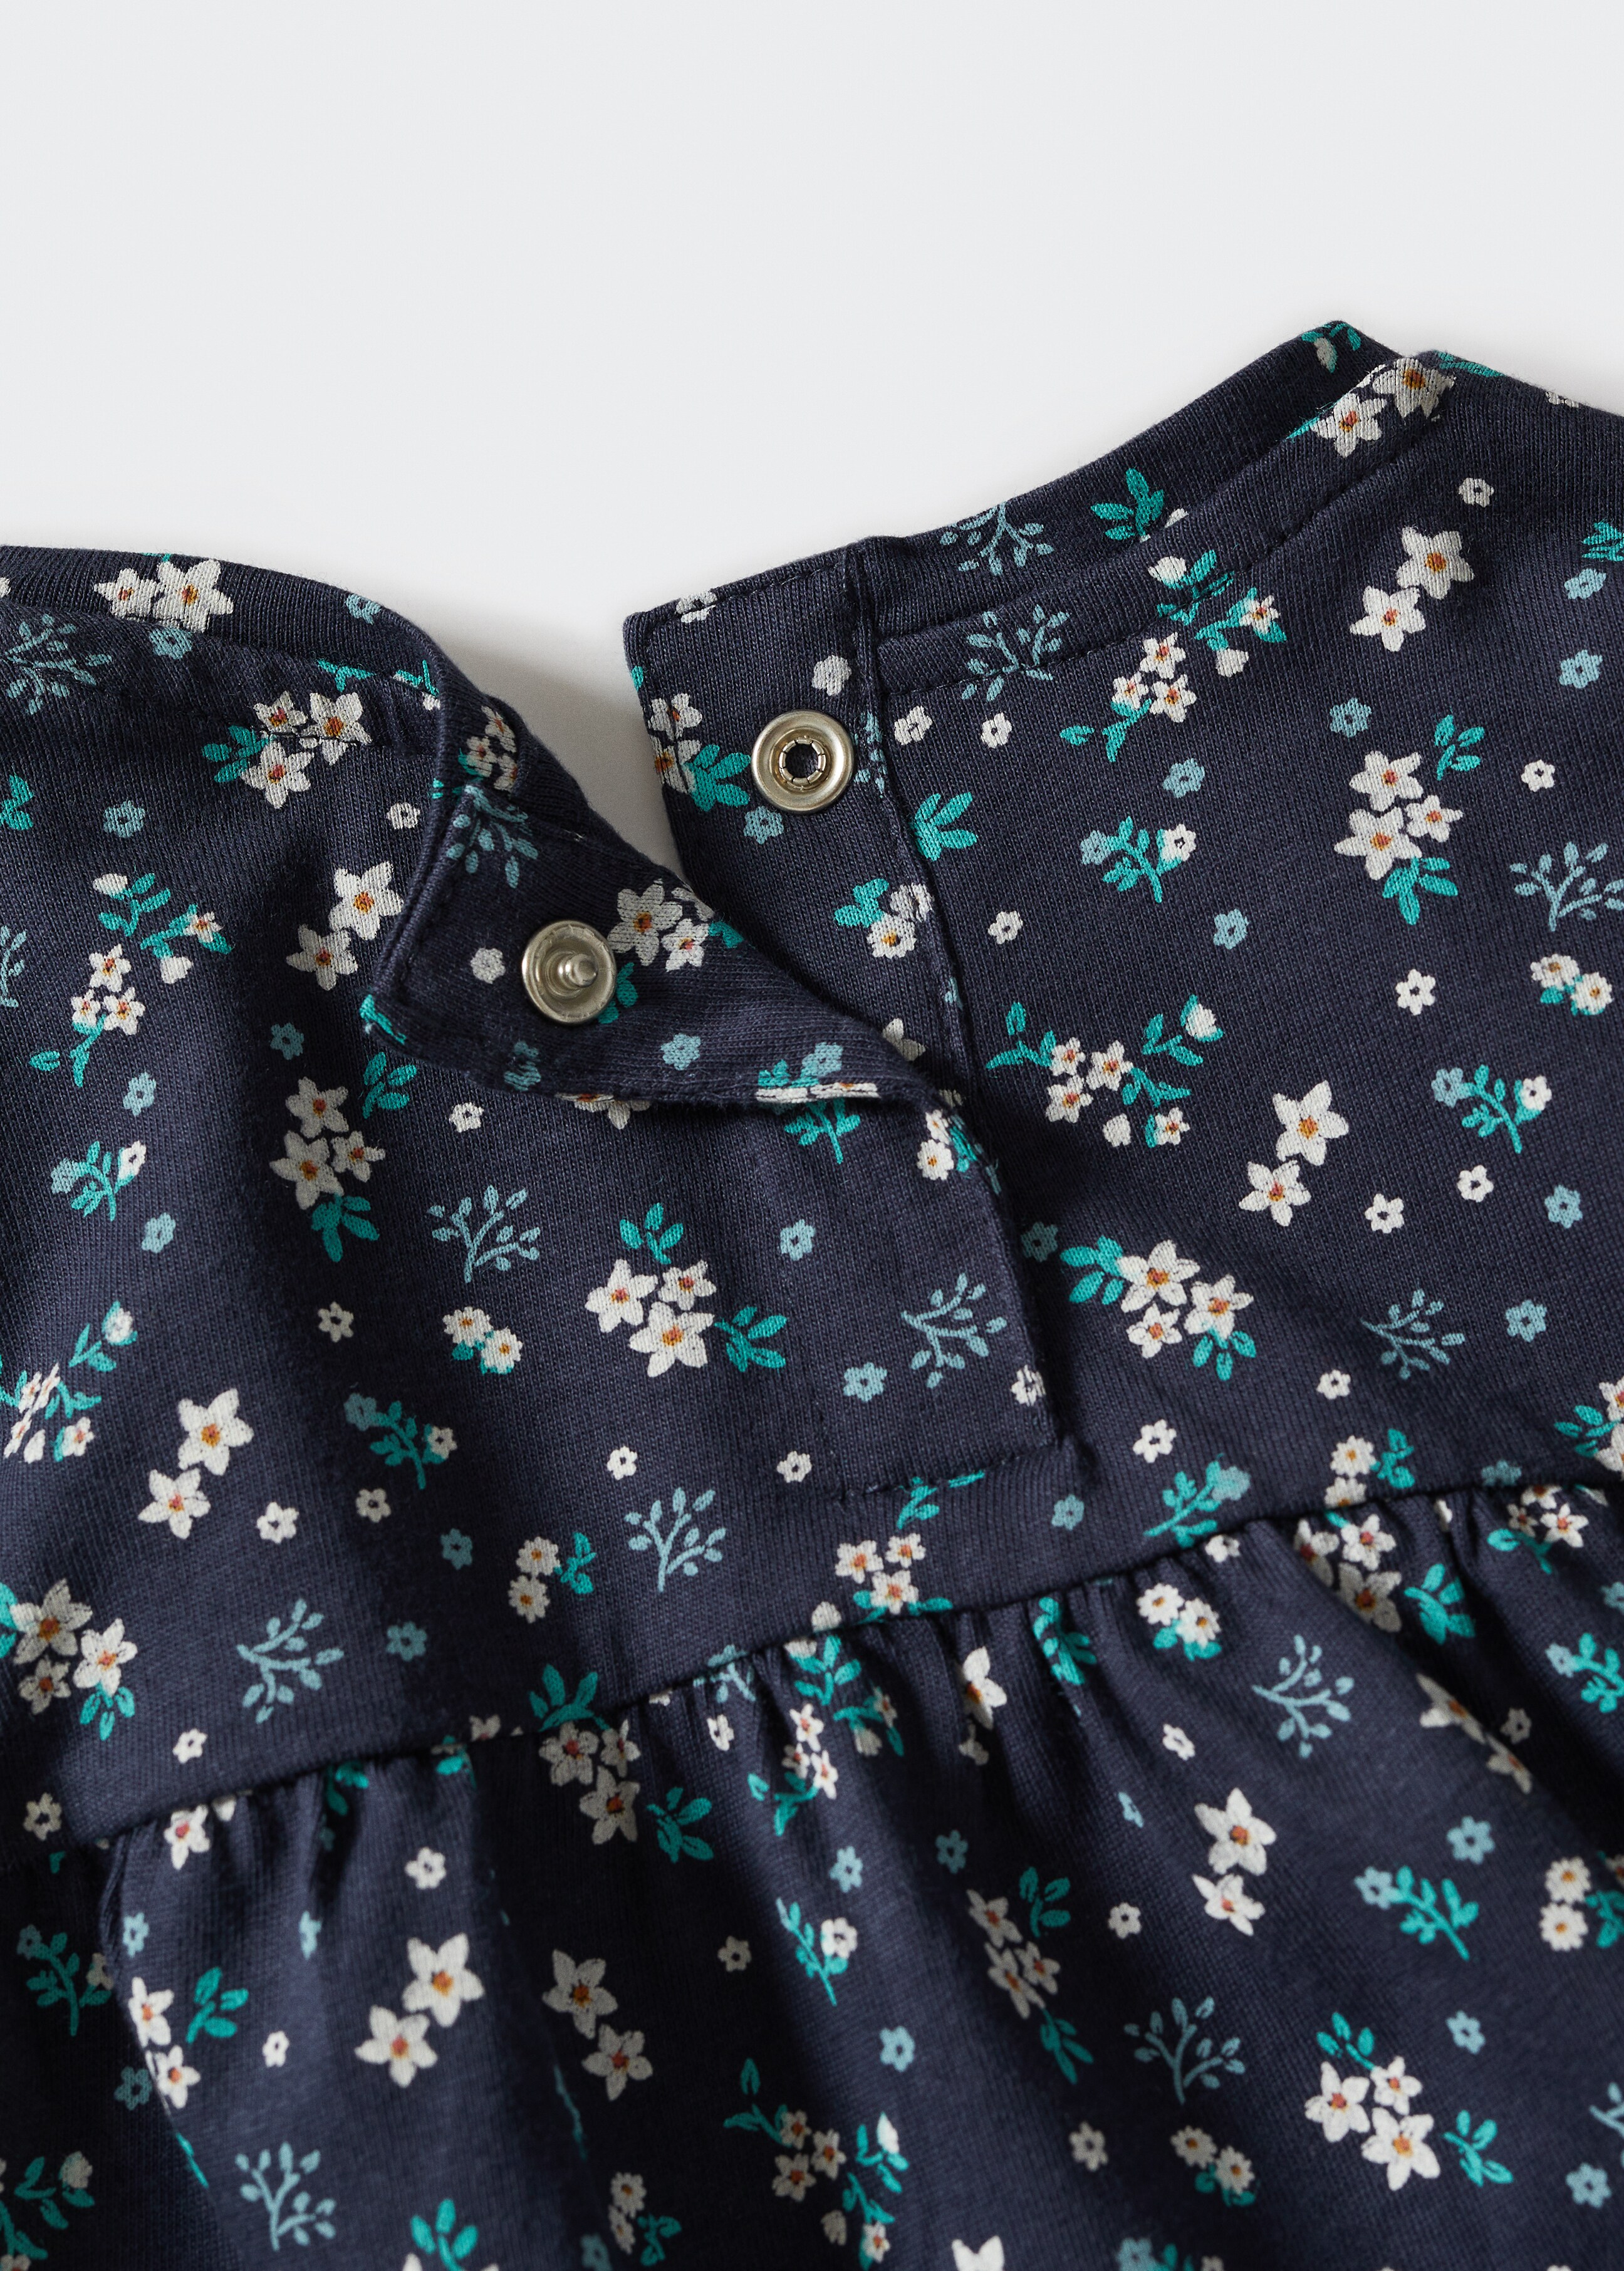 Floral cotton pyjamas - Details of the article 9